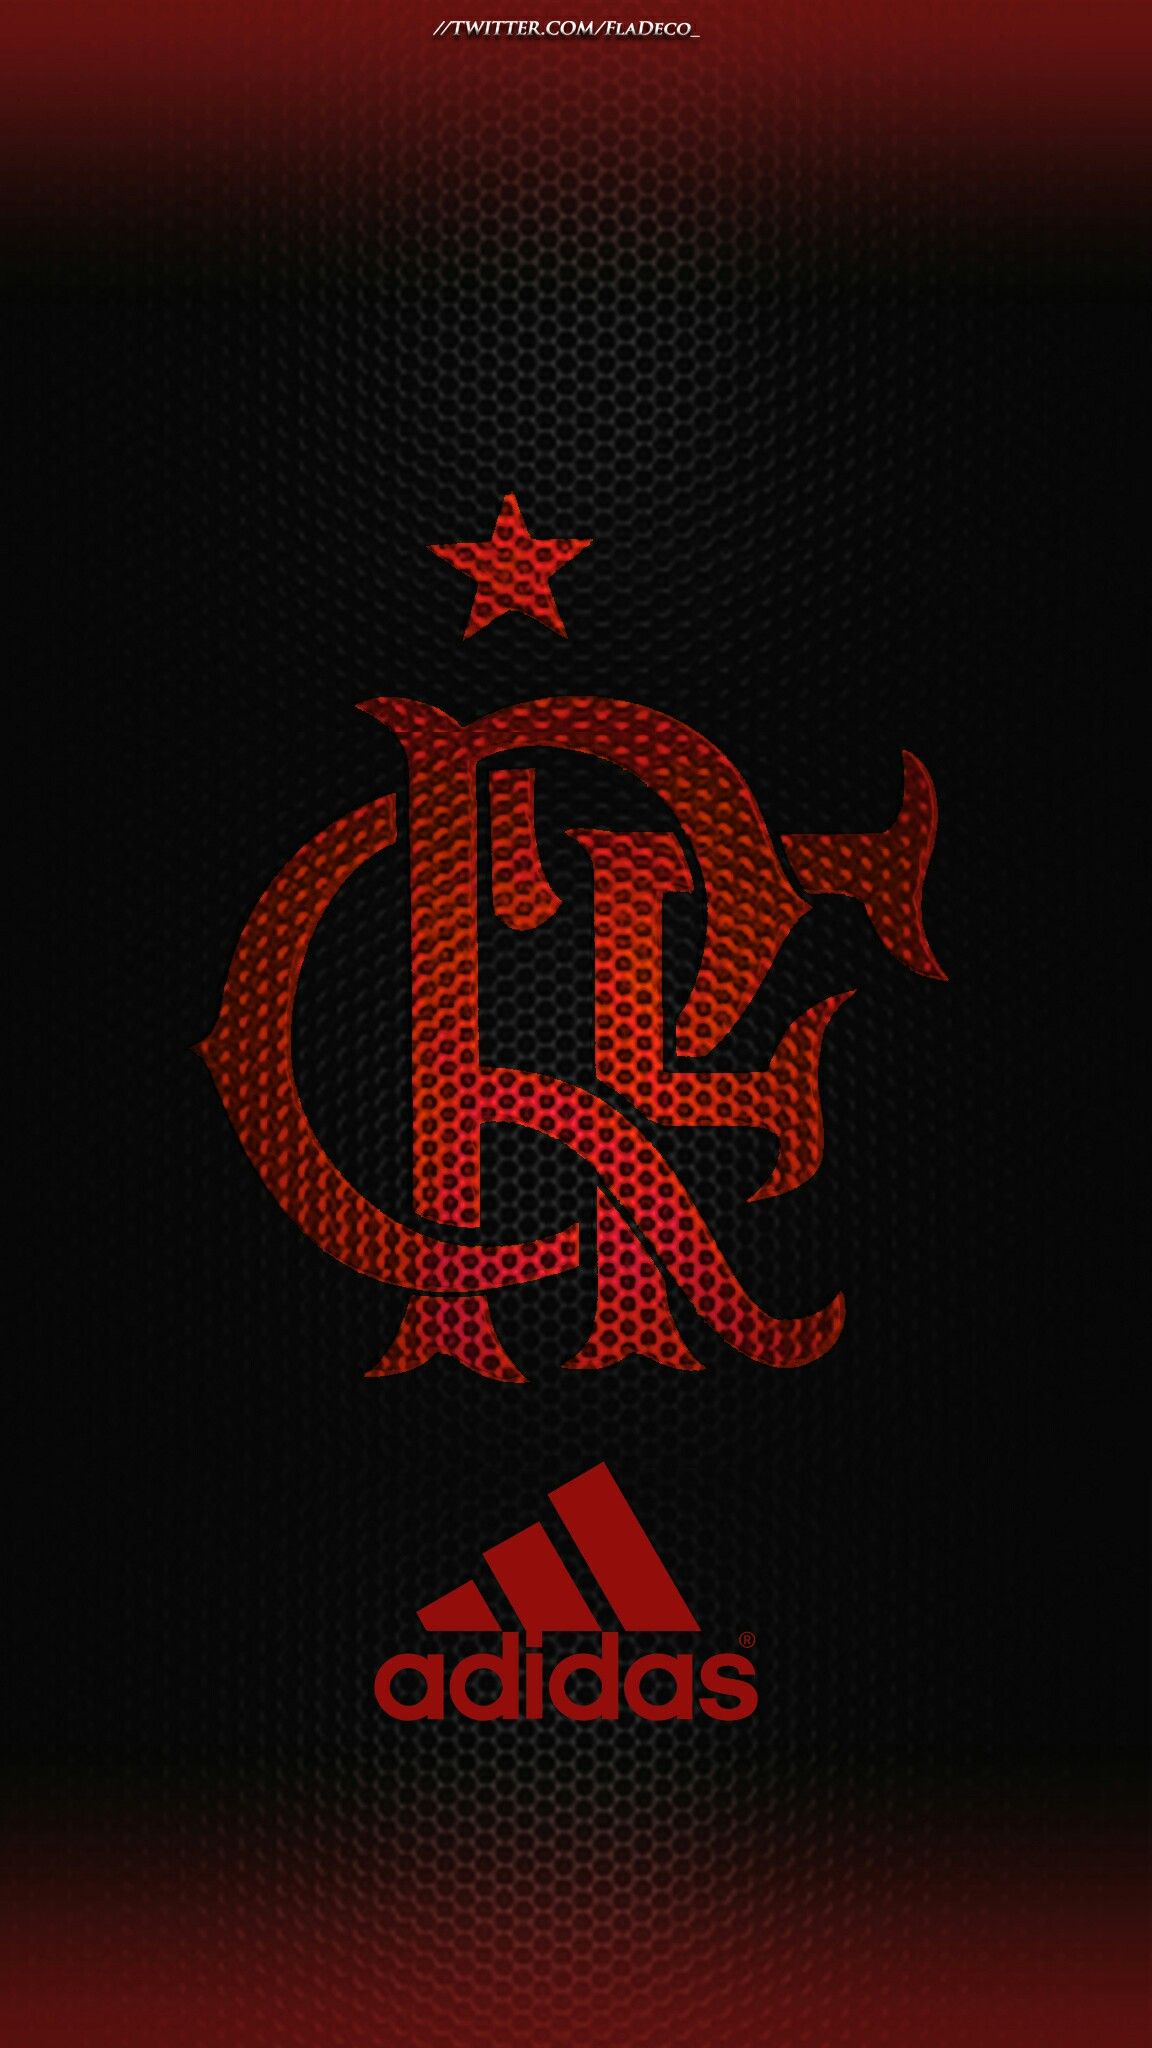 Flamengo Adidas Wallpaper Soccer Real Madrid